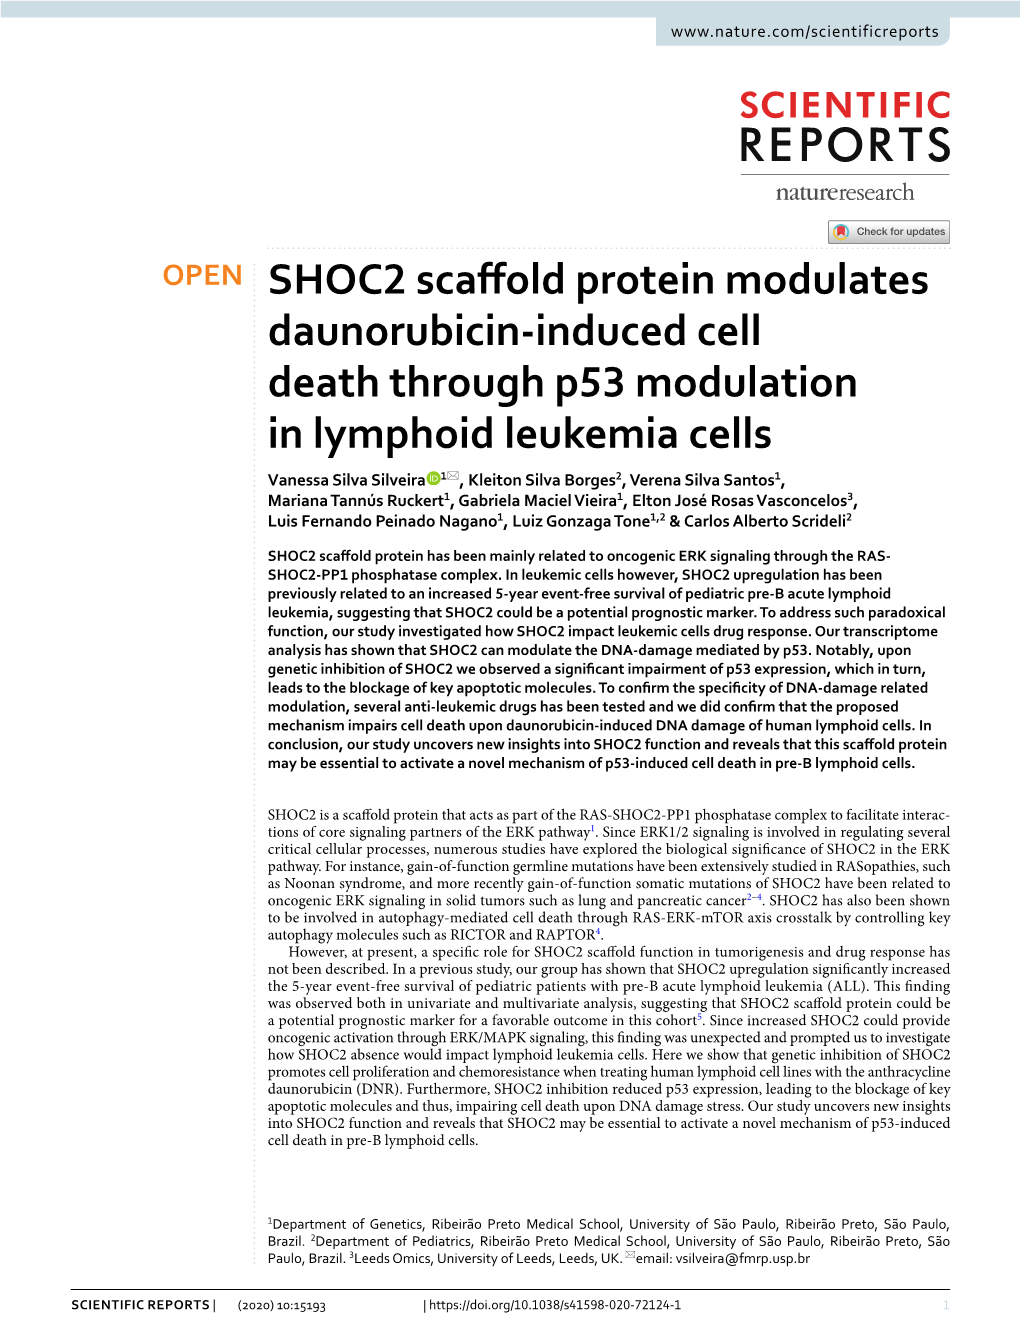 SHOC2 Scaffold Protein Modulates Daunorubicin-Induced Cell Death